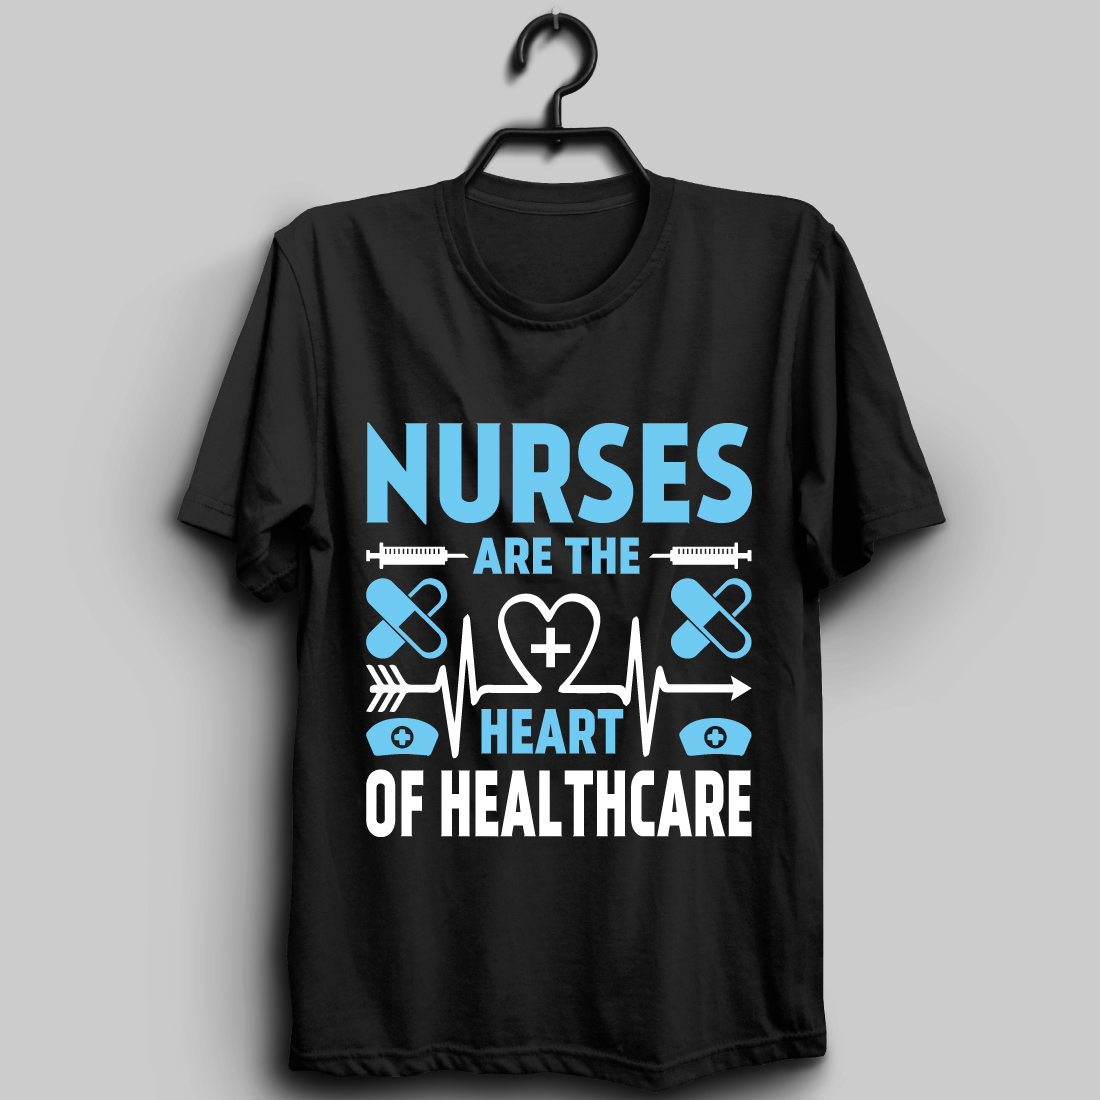 nurse t shirt design 05 238